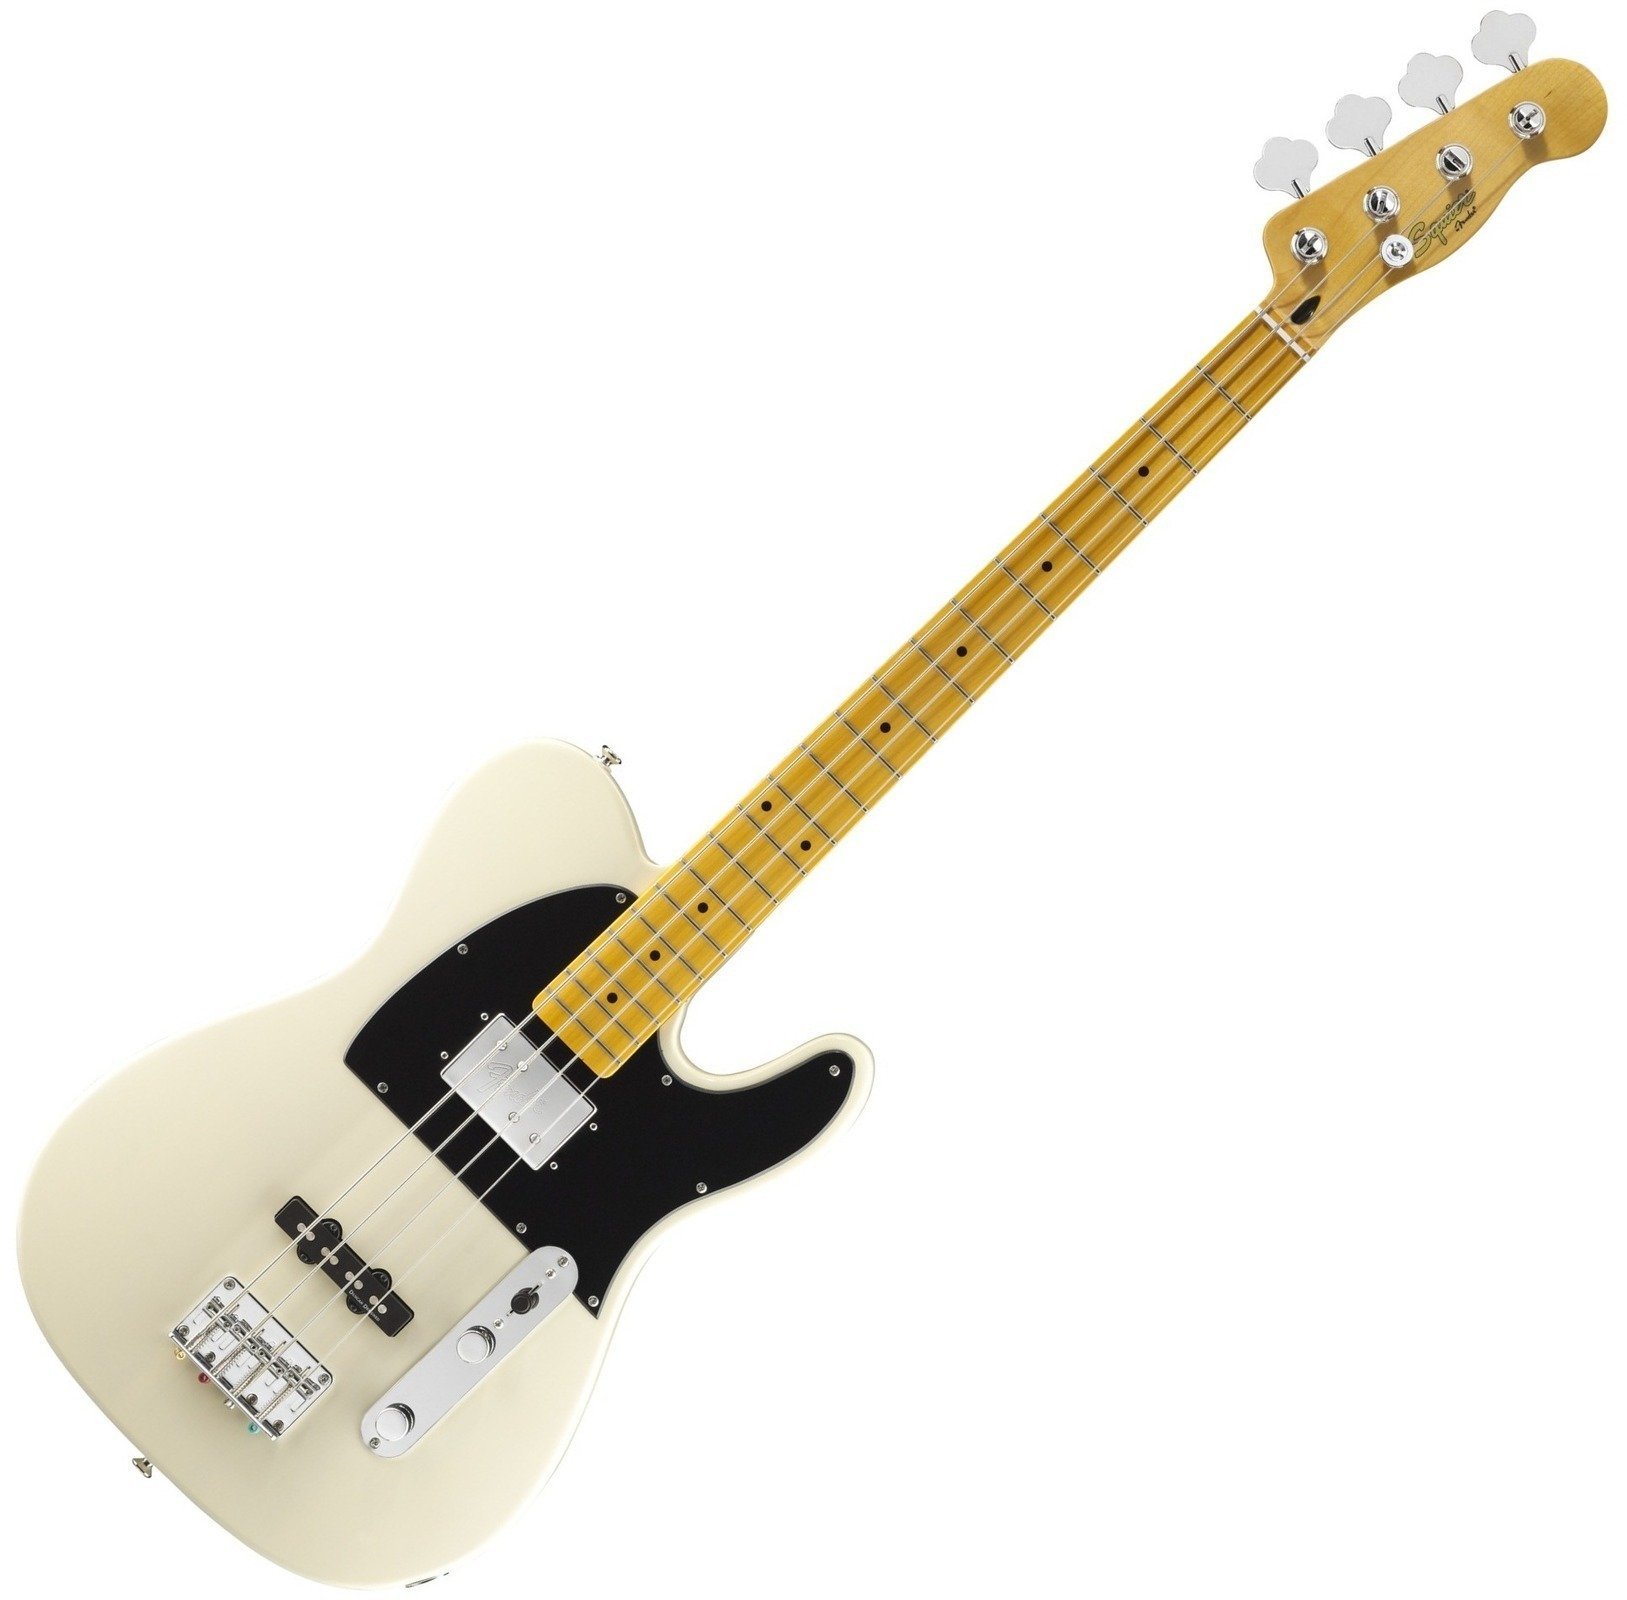 Baixo de 4 cordas Fender Squier Vintage Modified Telecaster Bass Vintage Blonde